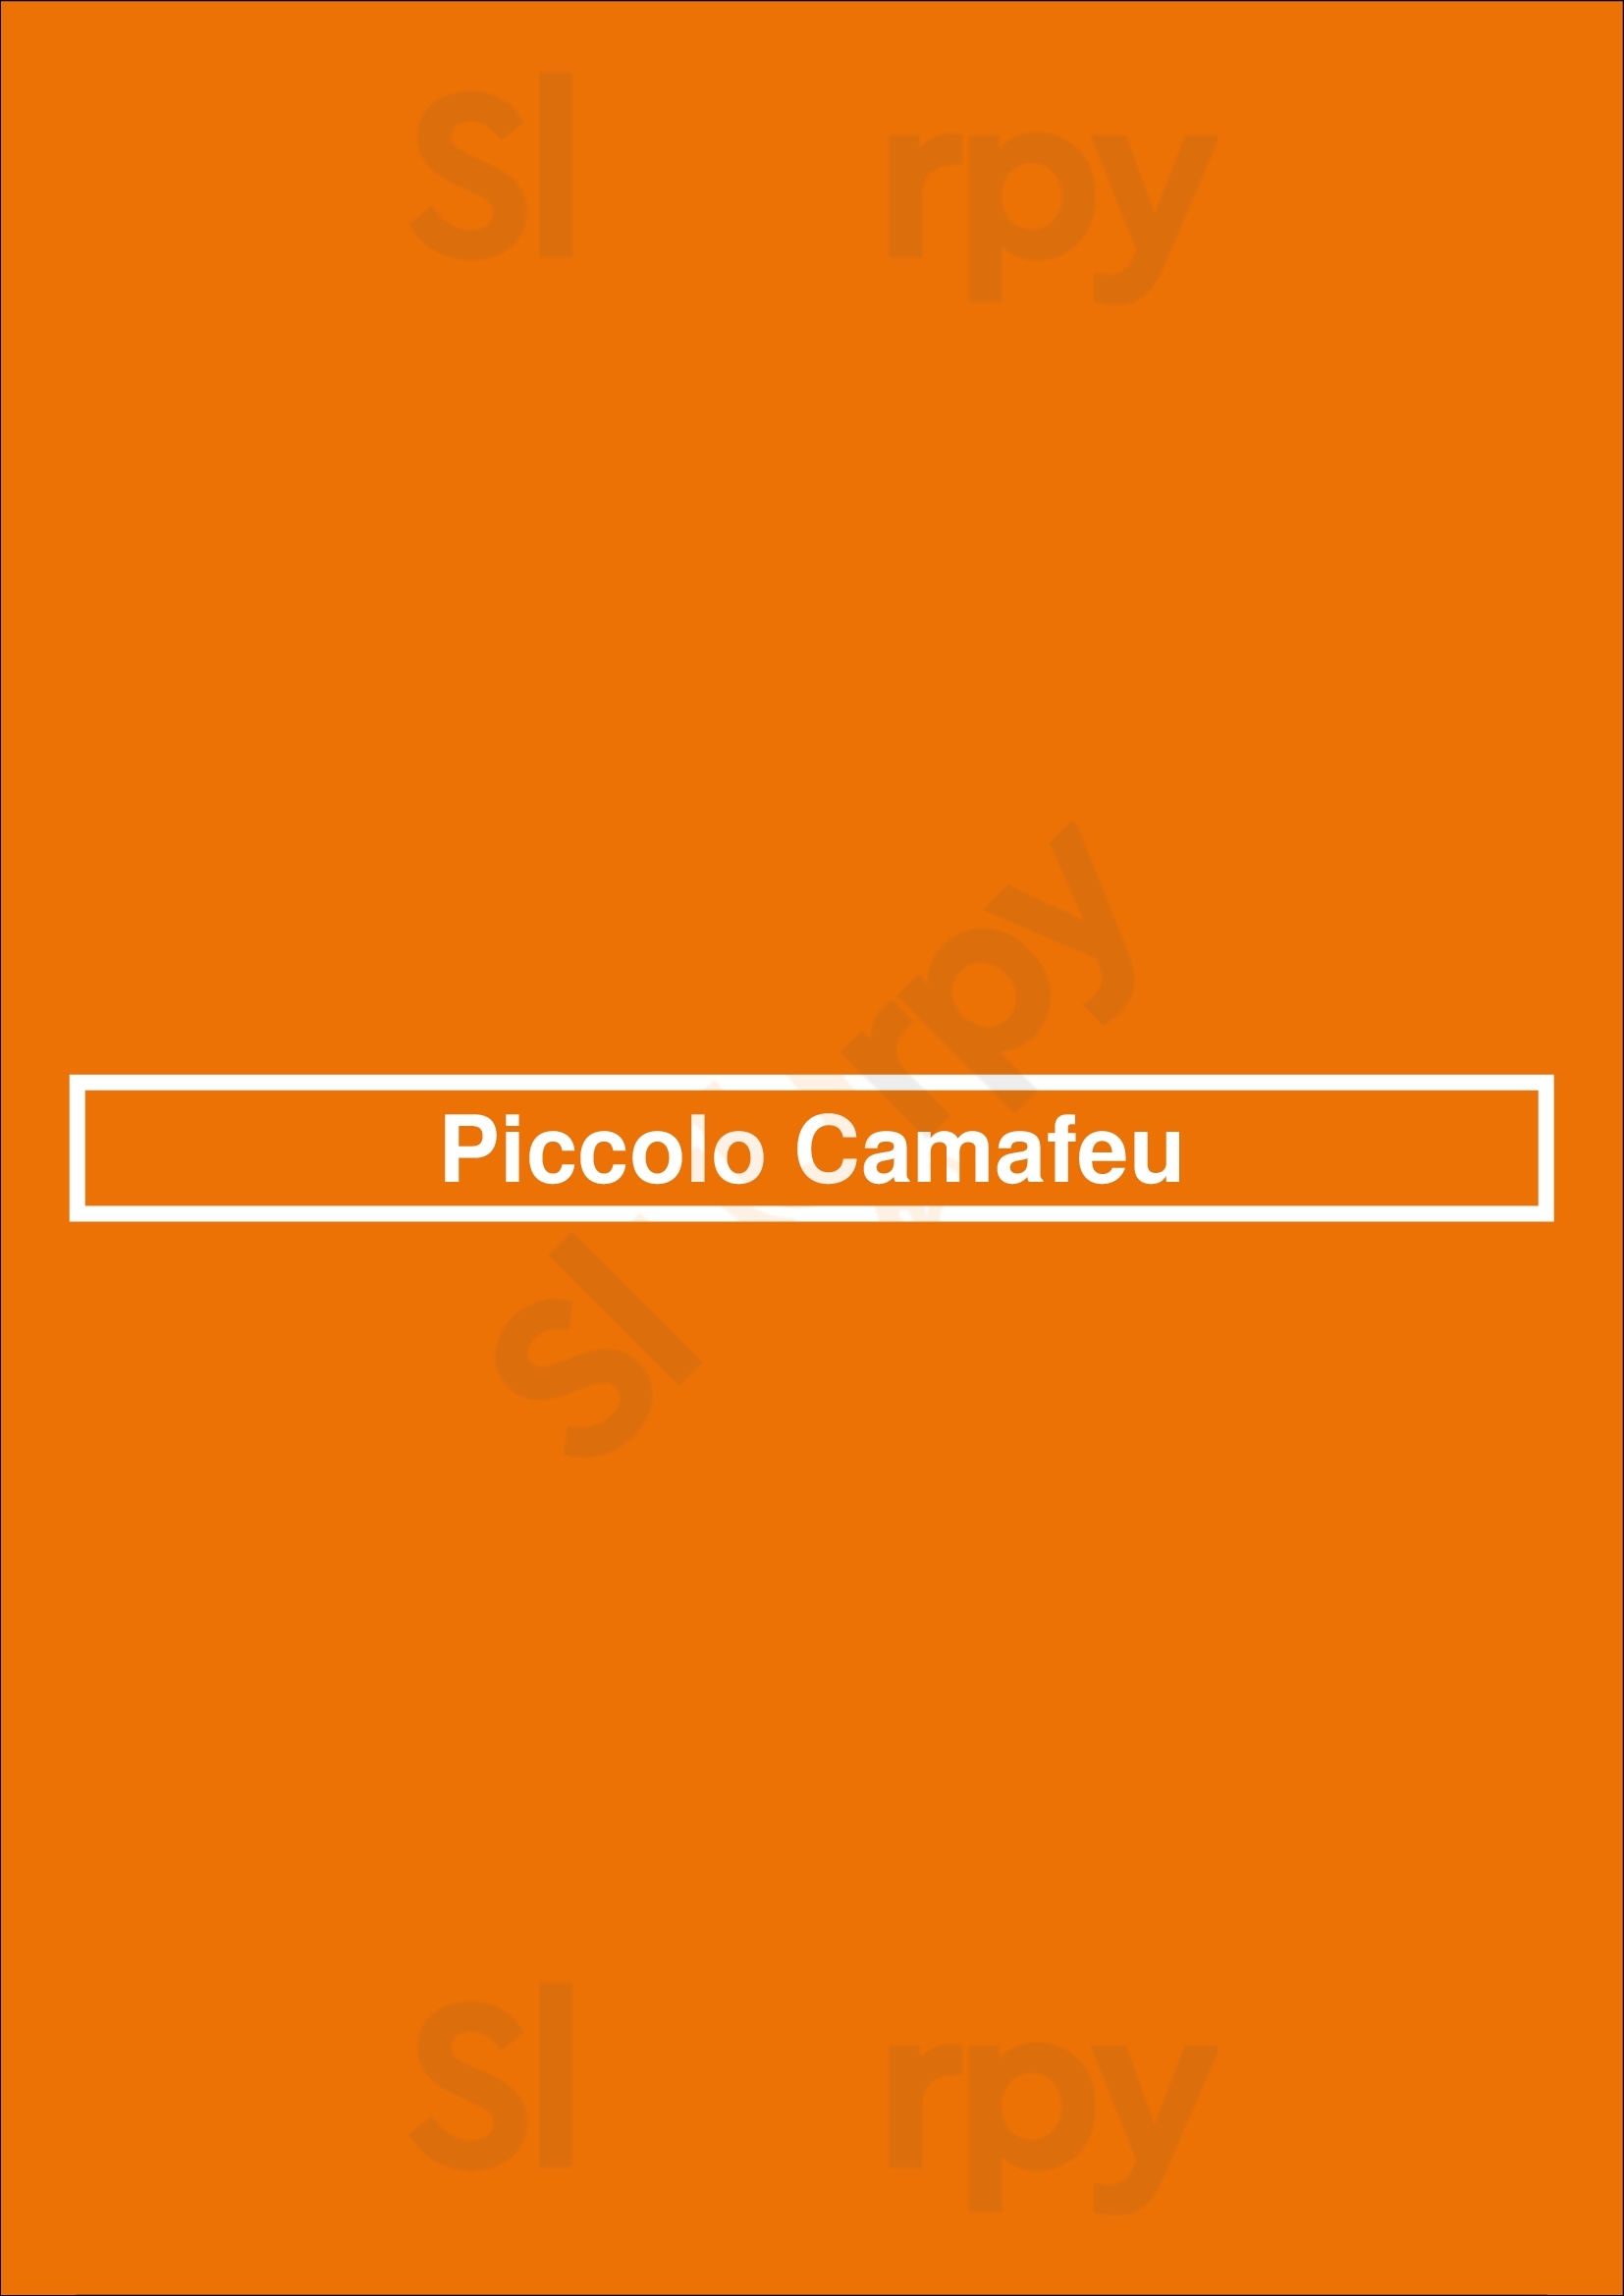 Piccolo Camafeu Porto Menu - 1